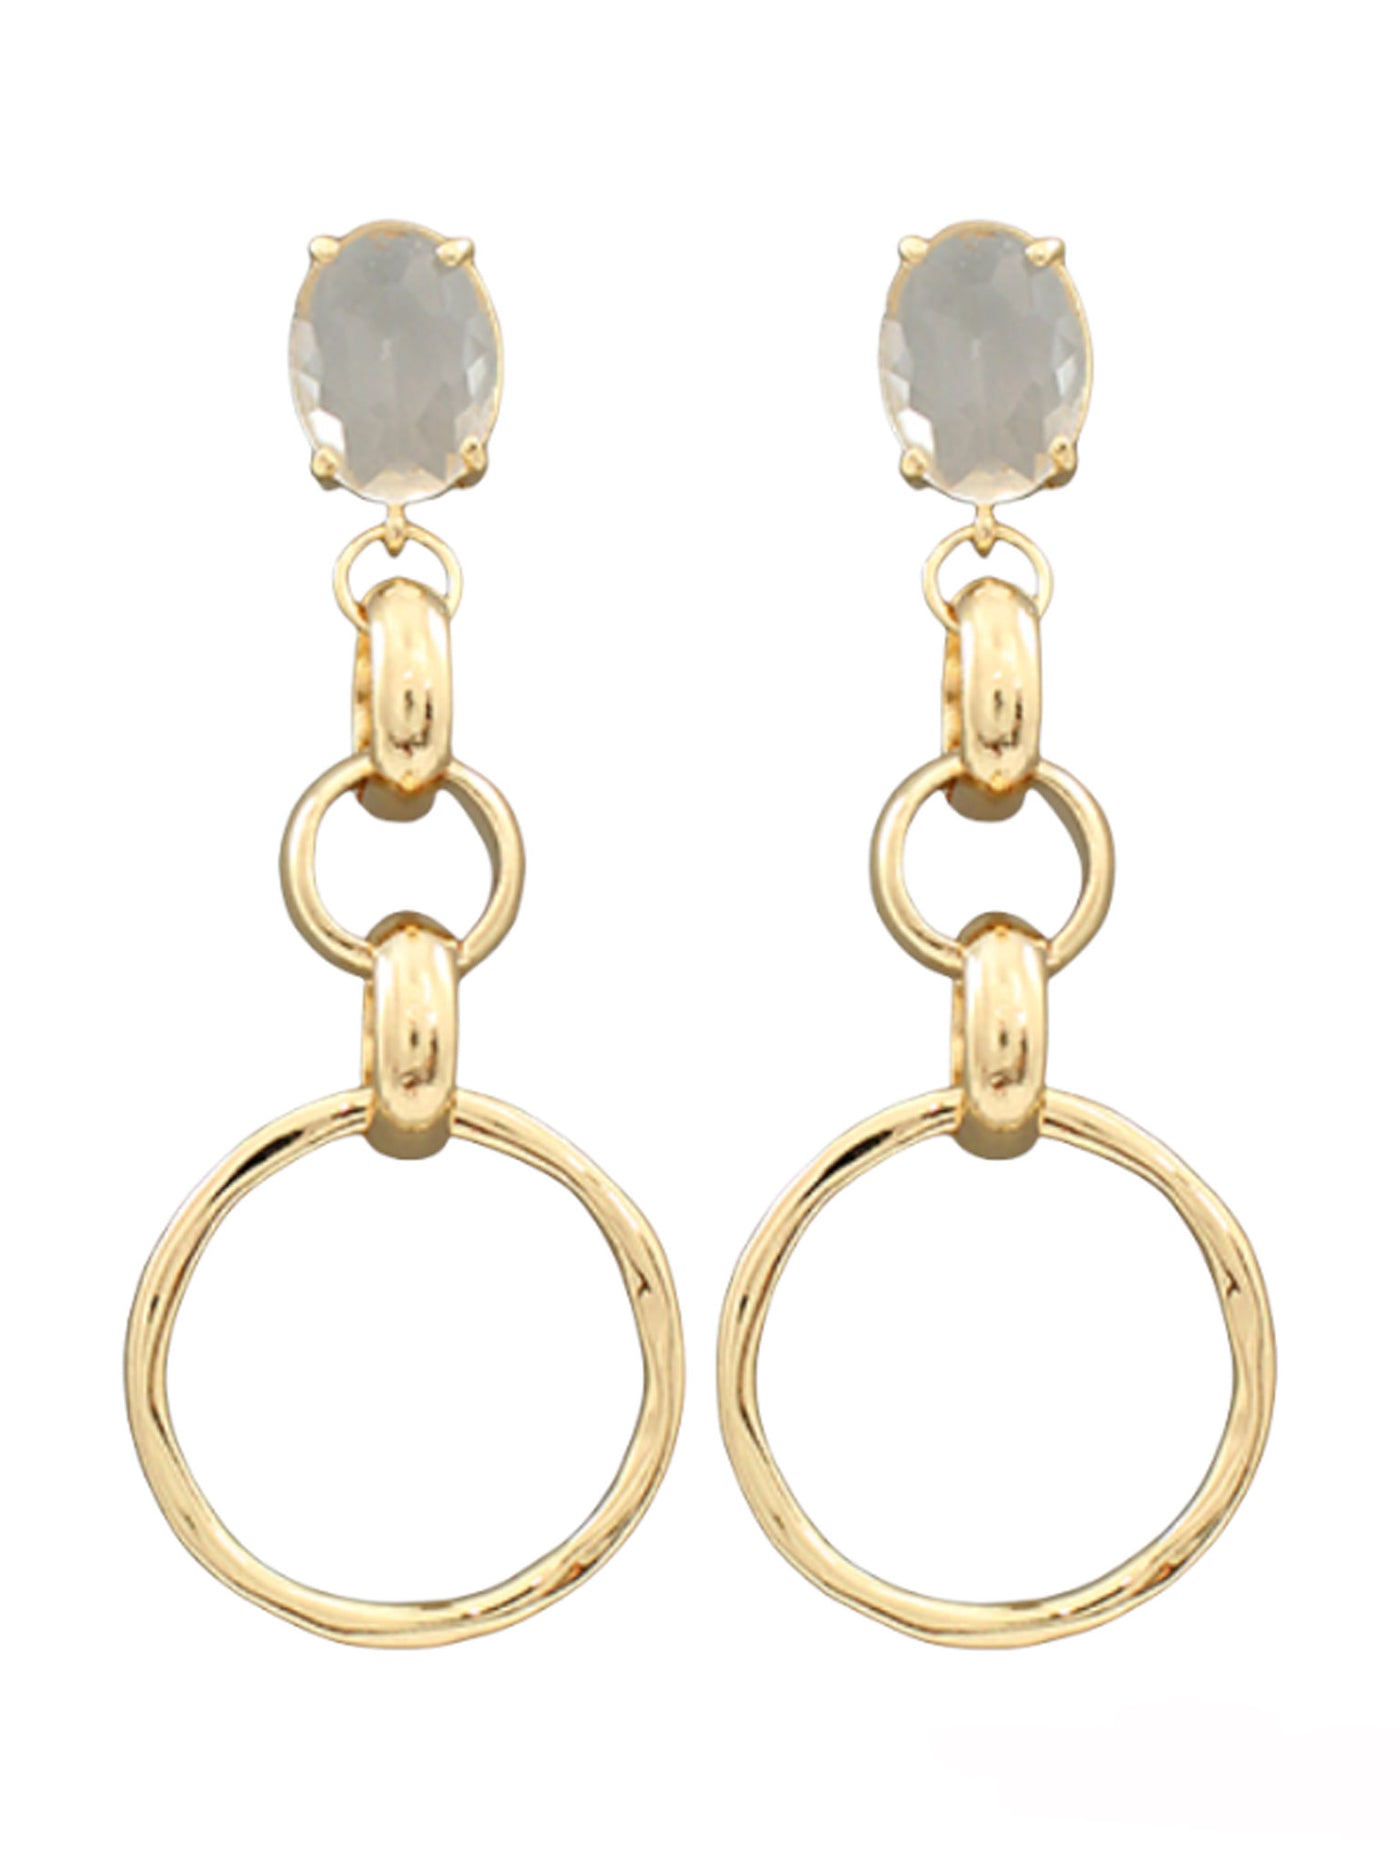 Oval Crystal & Chain Link Earrings